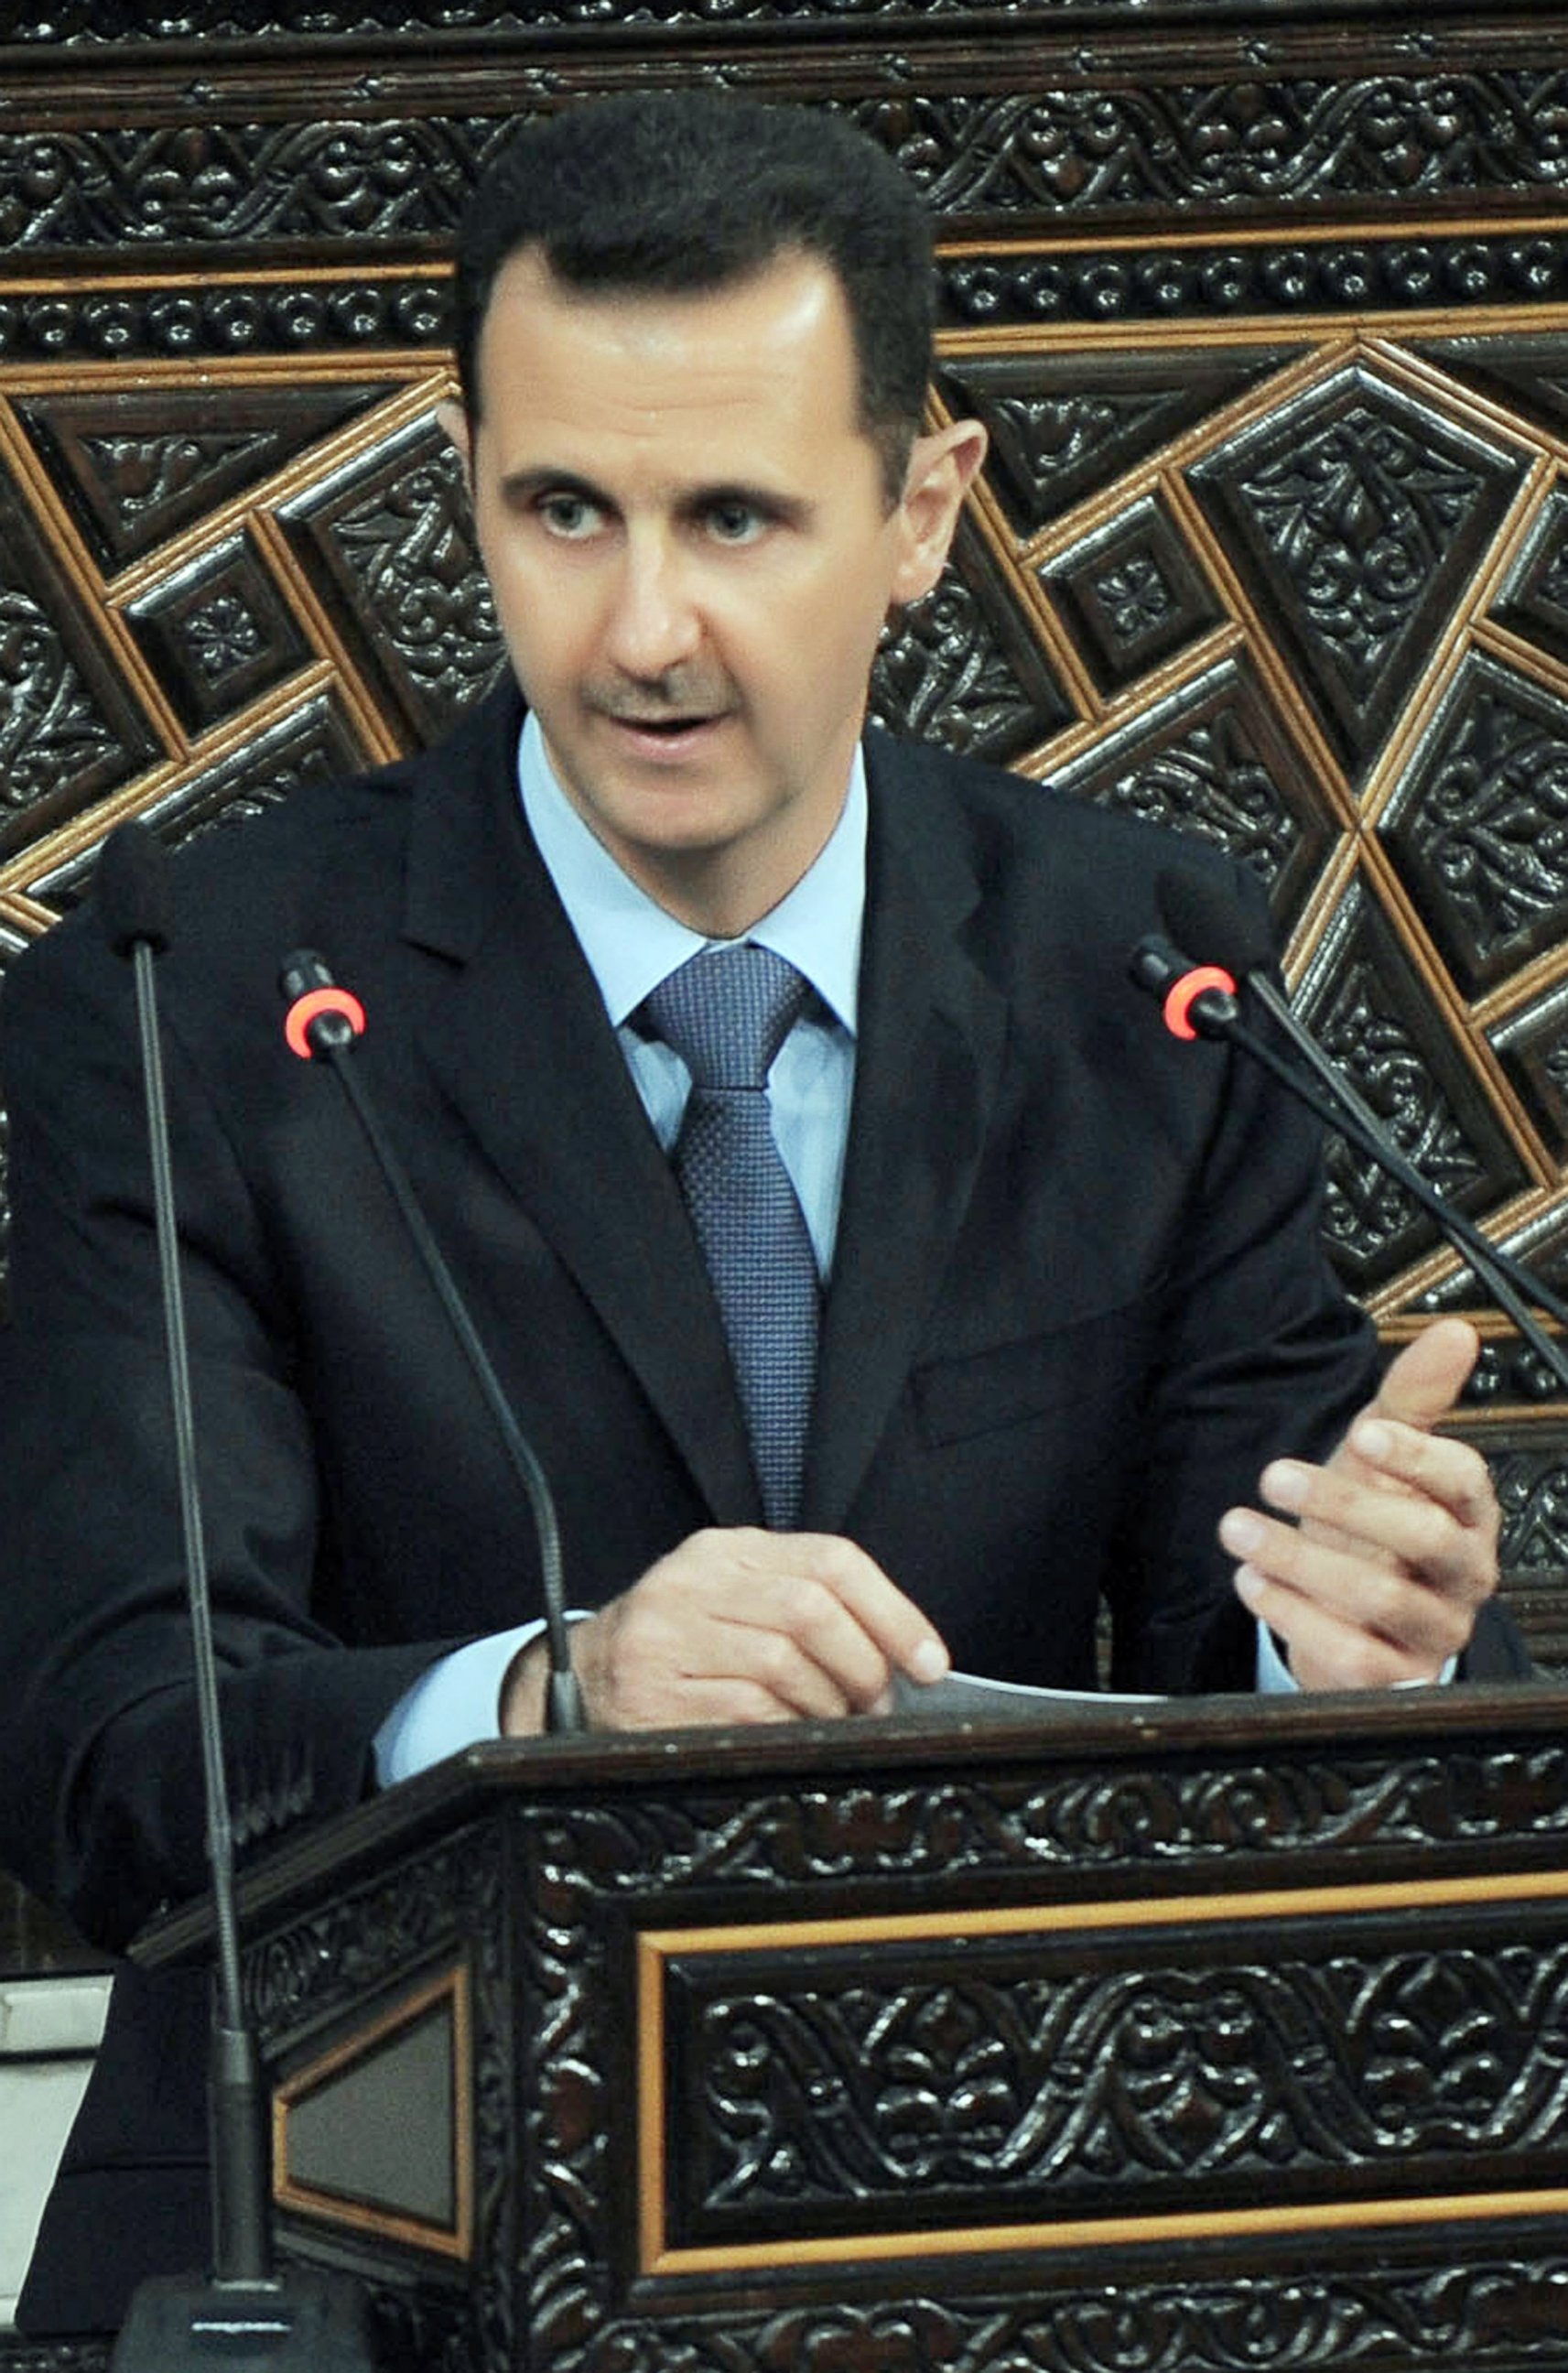 PHOTO: Syrian President Bashar Al-Assad addresses the parliament in Damascus, Syria, March 30, 2011.